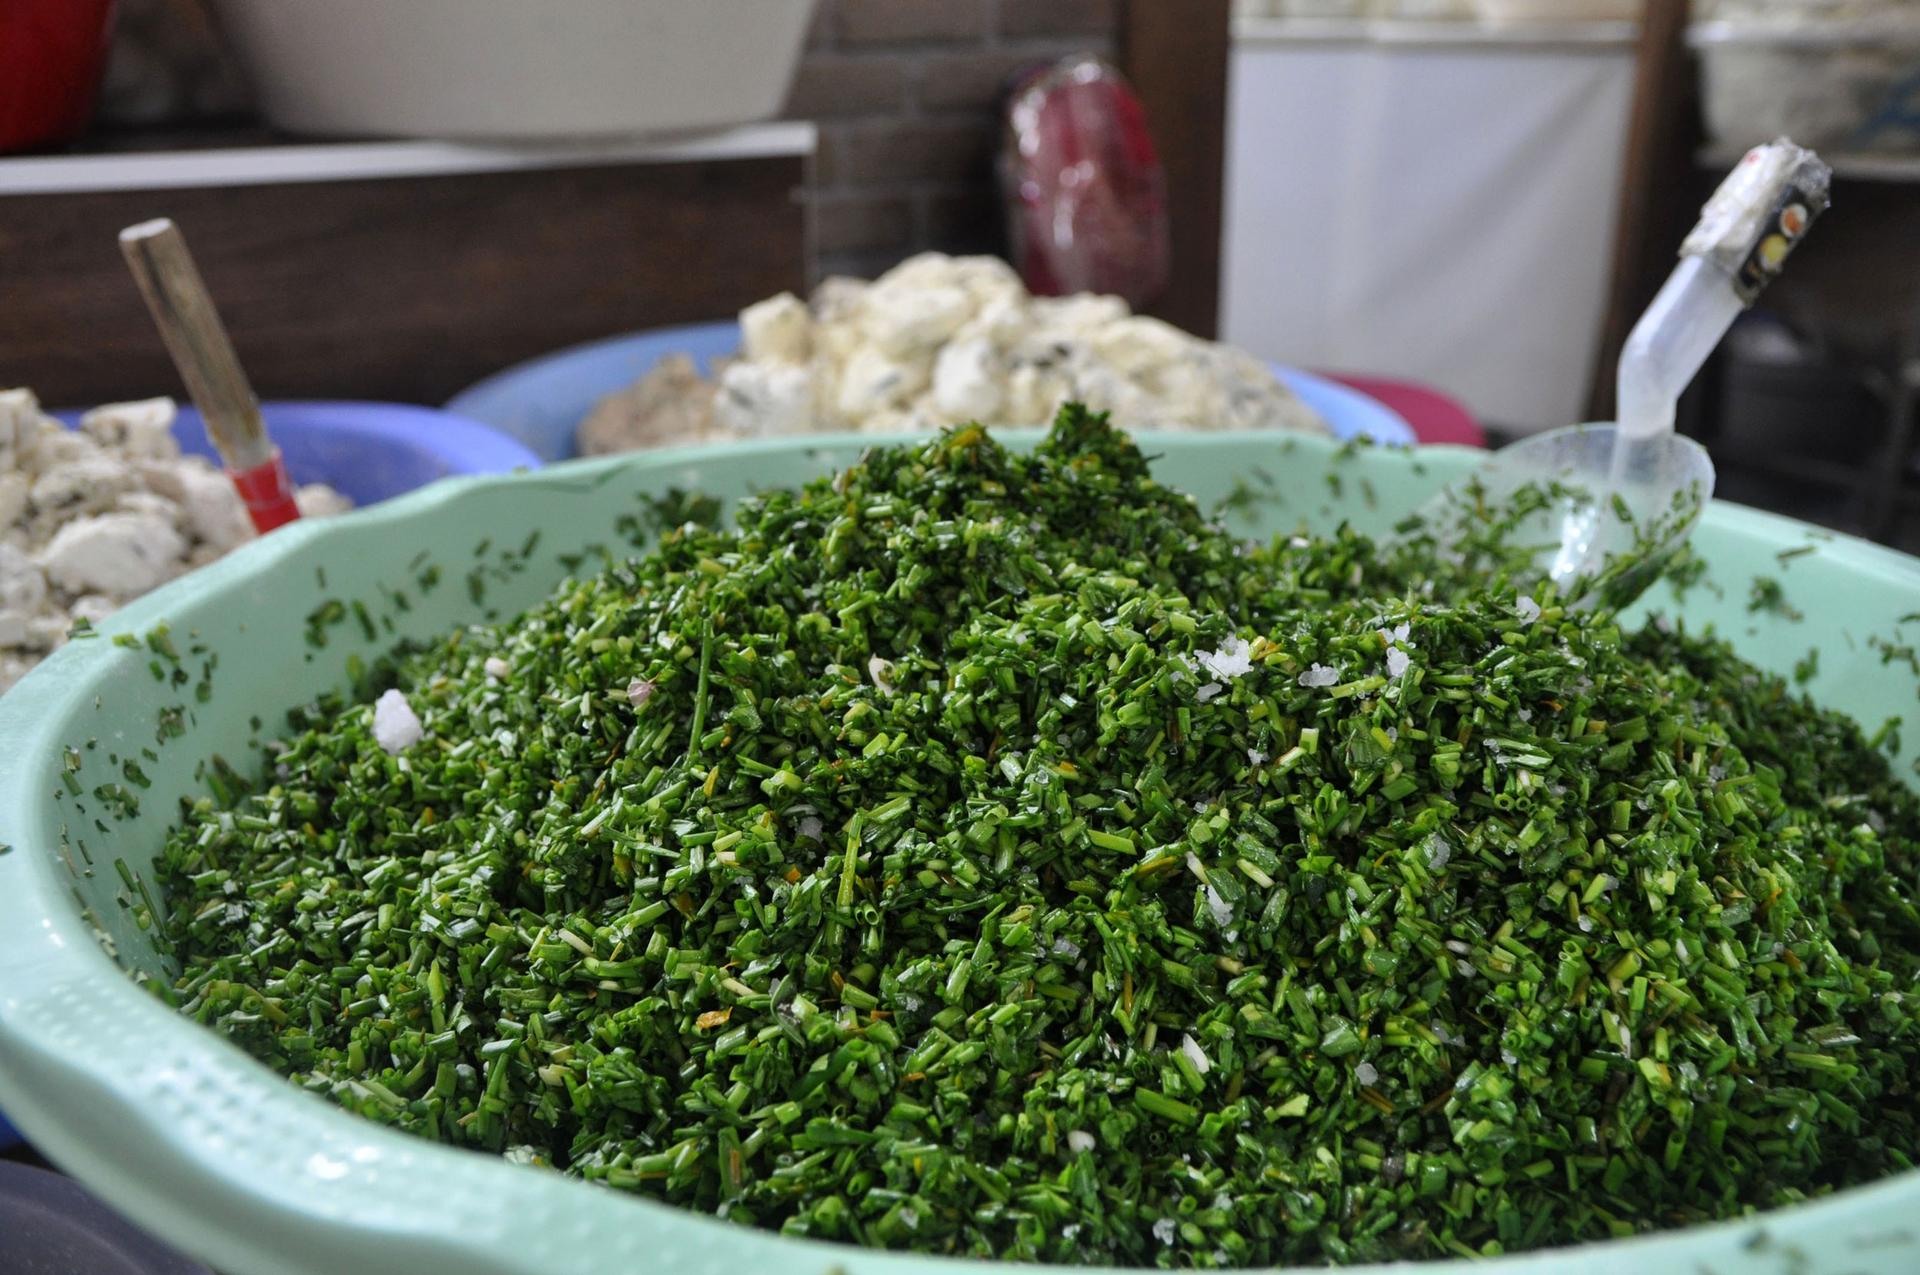 Green herbs used in Van Otlu Peyniri mixed in a green bowl.